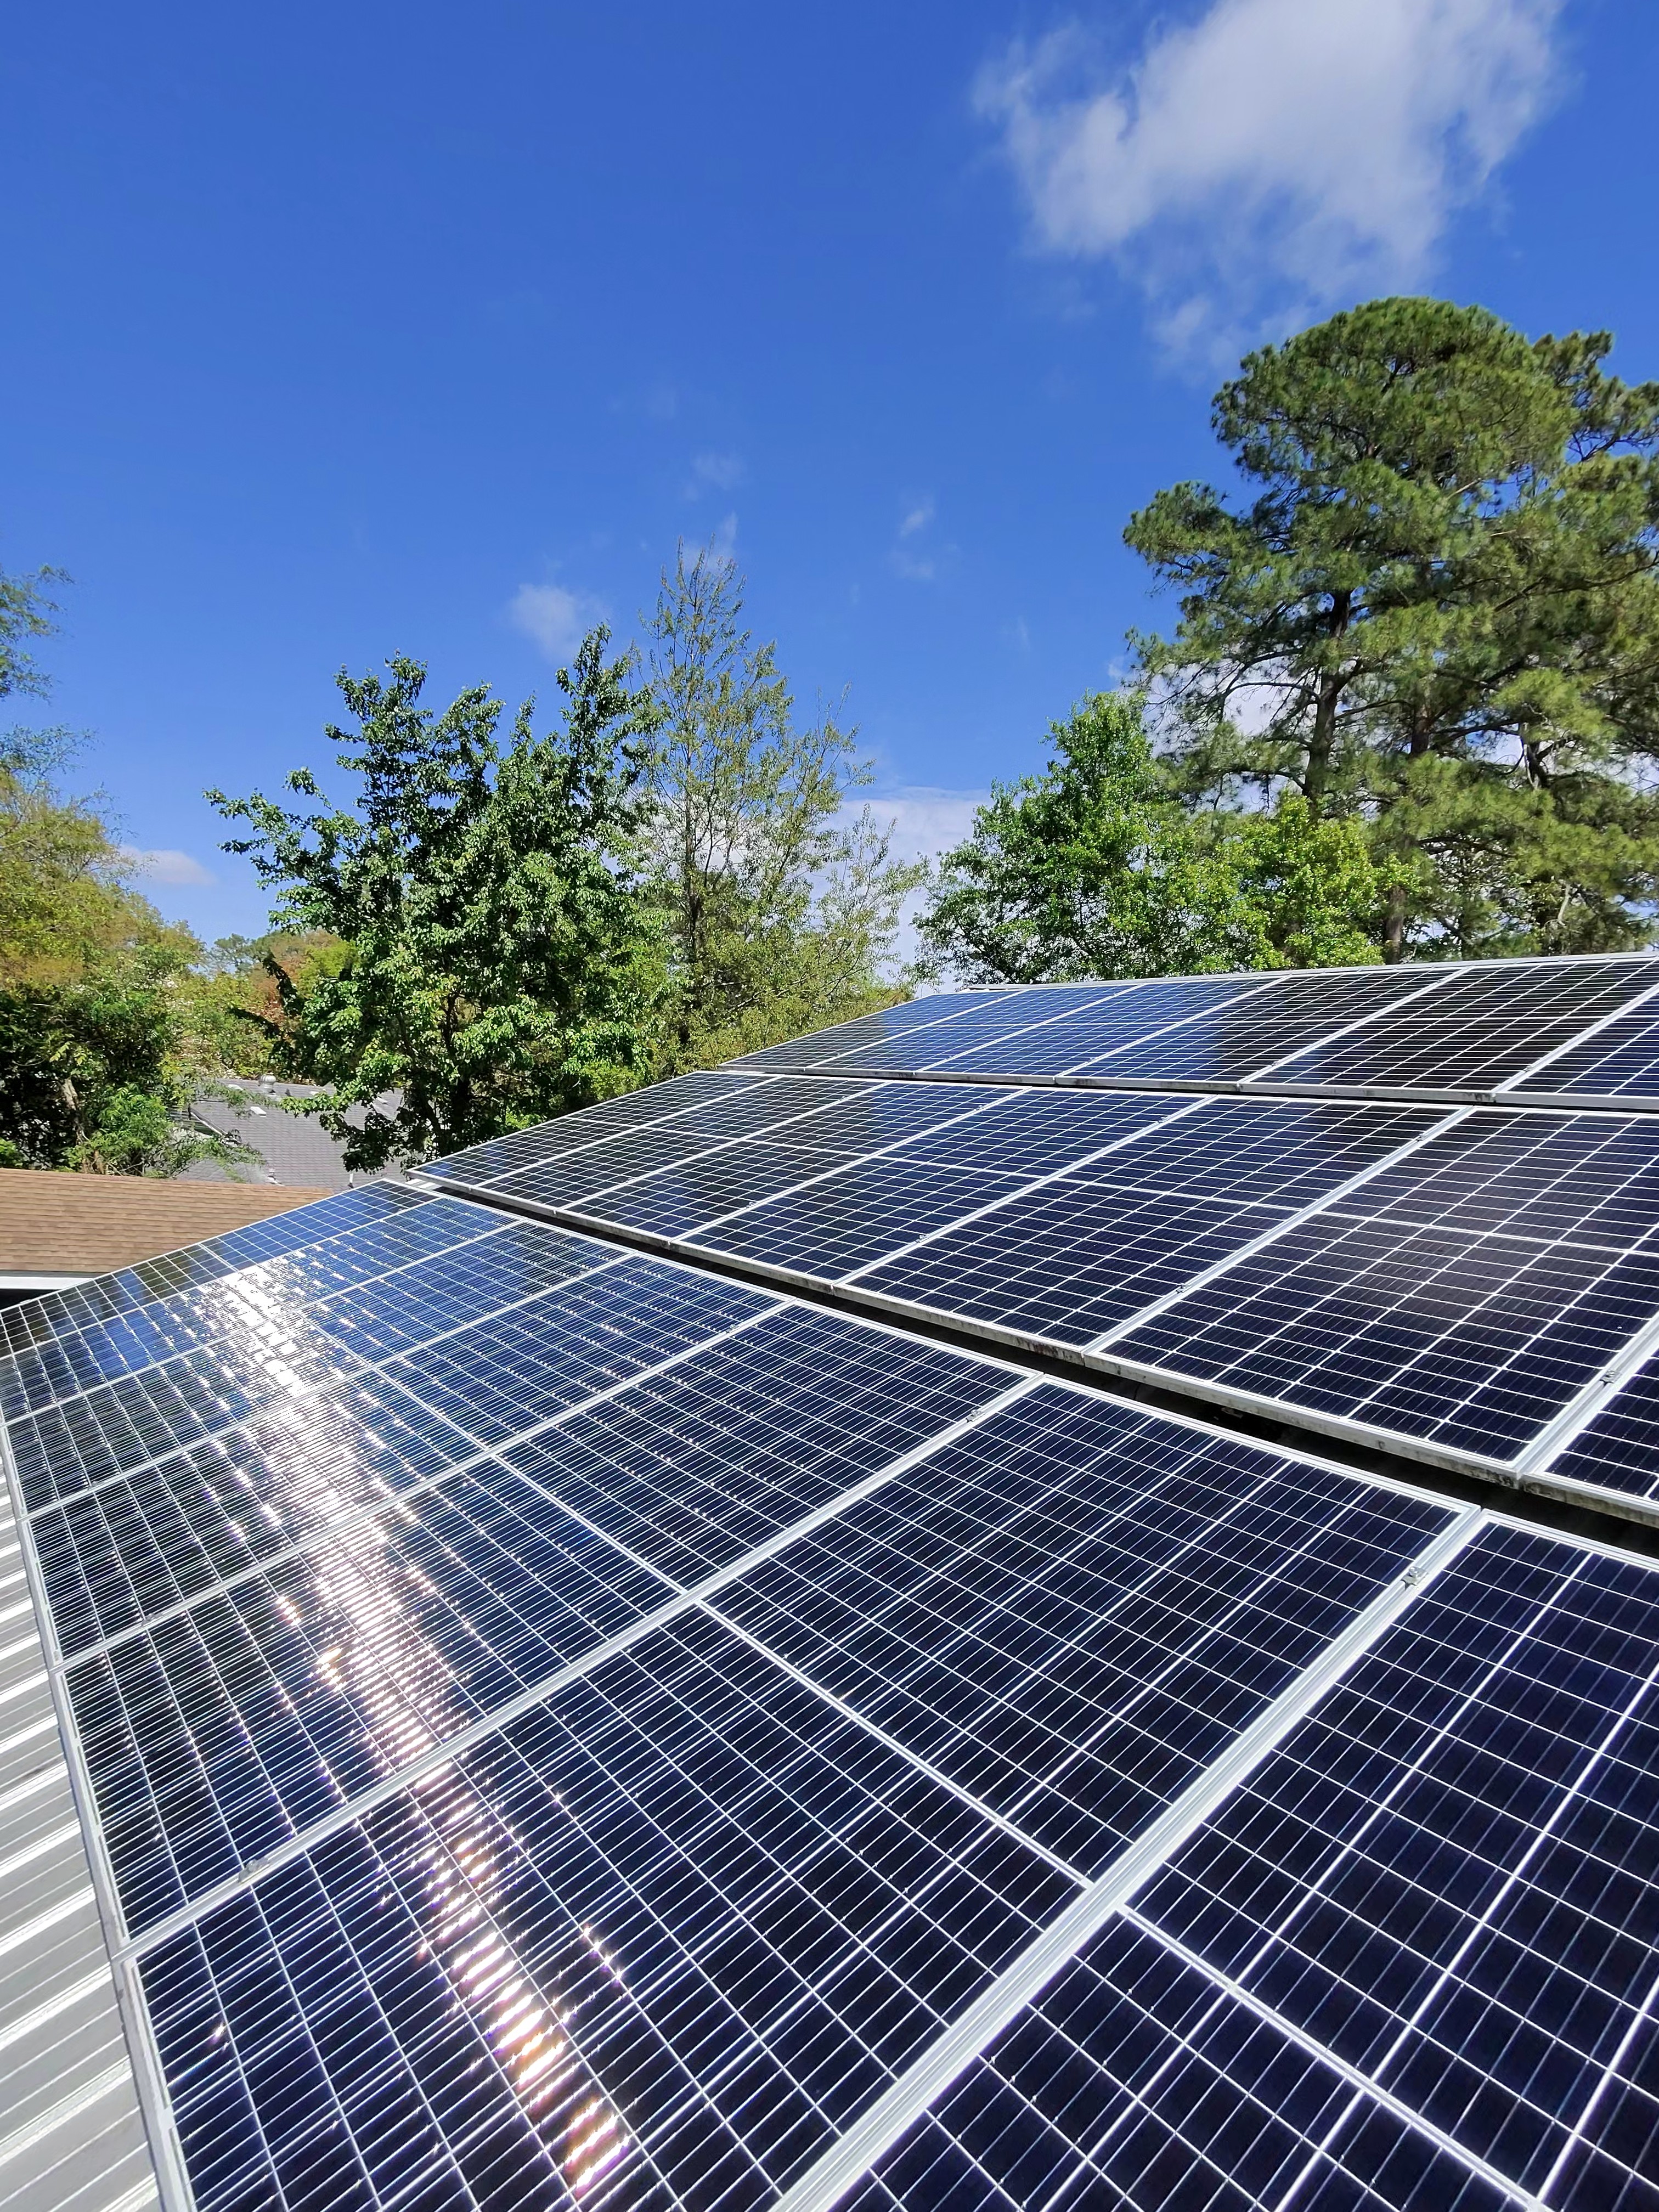 Solar panel cleaning Savannah,Ga